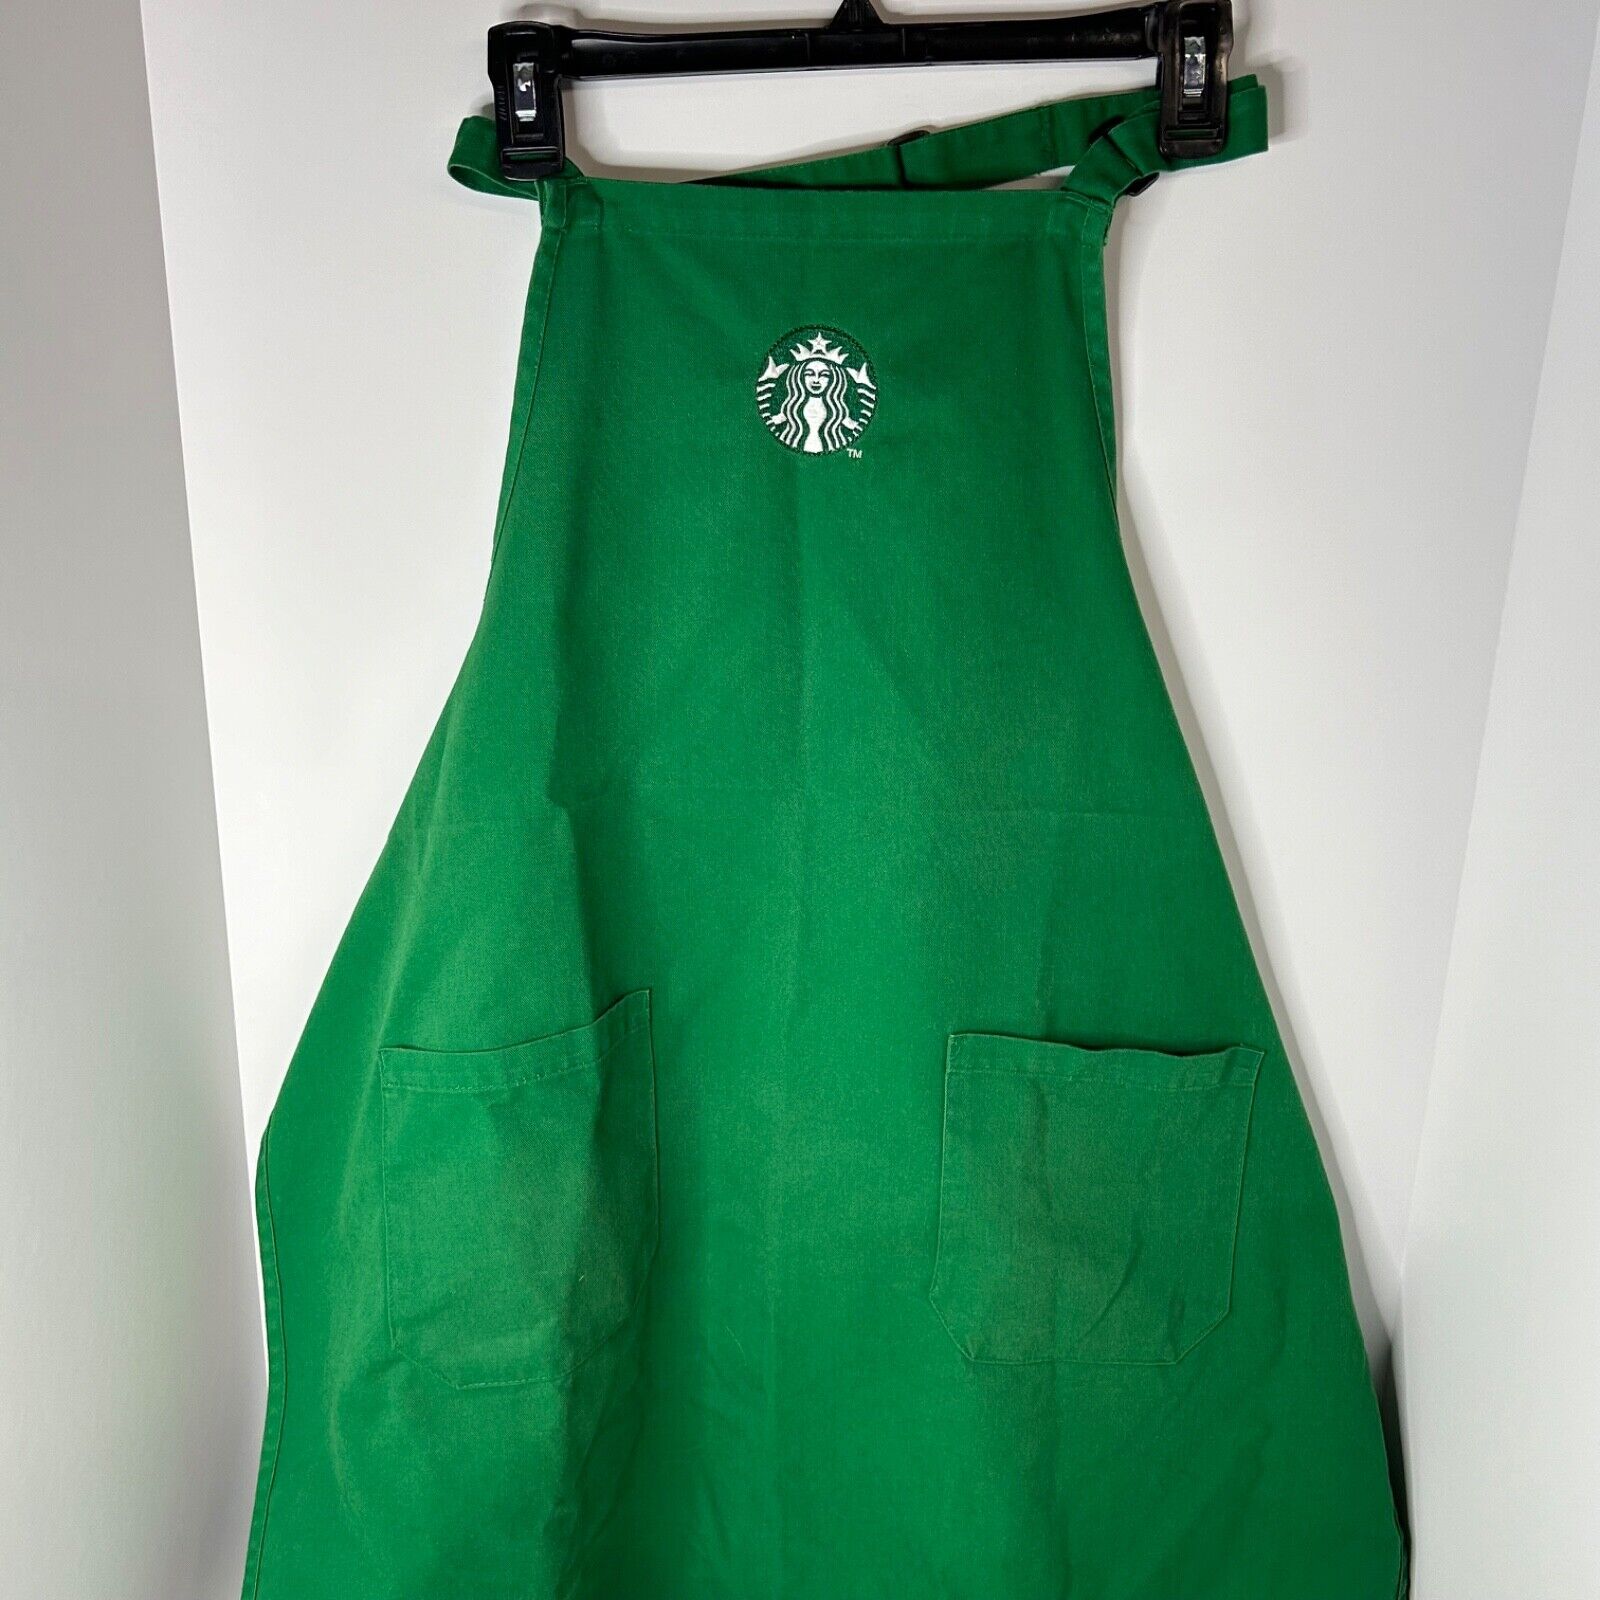 Starbucks Apron Green Authentic Barista Employee Uniform Logo Pockets Tie On